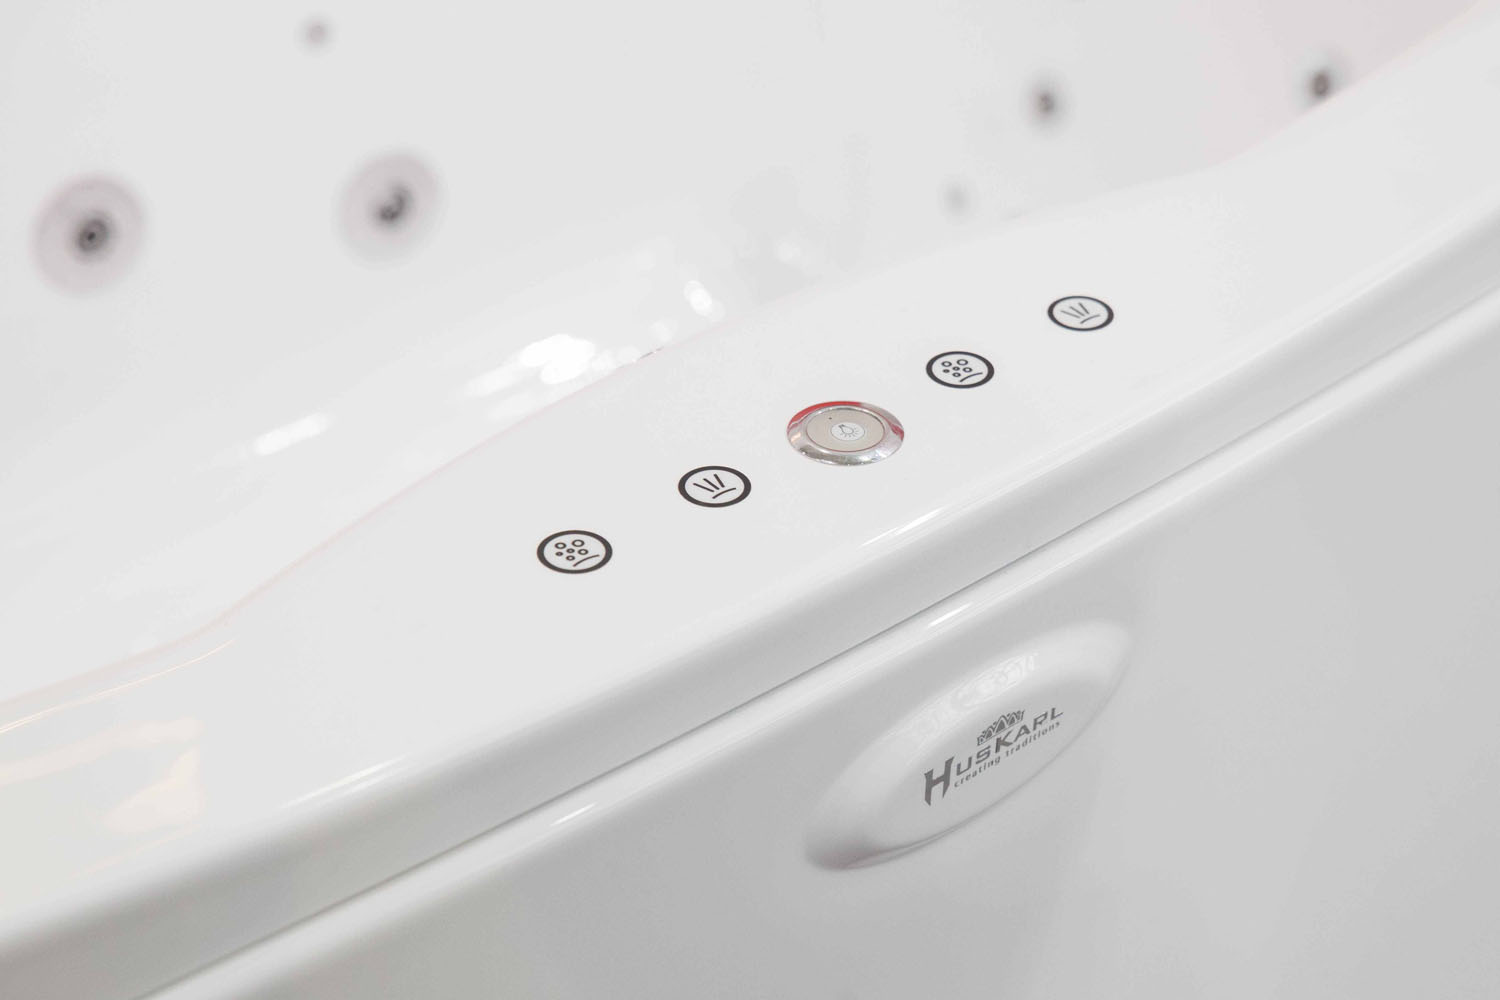 Гидромассажная ванна HusKarl EINAR NEW на выставке МосБилд 2017